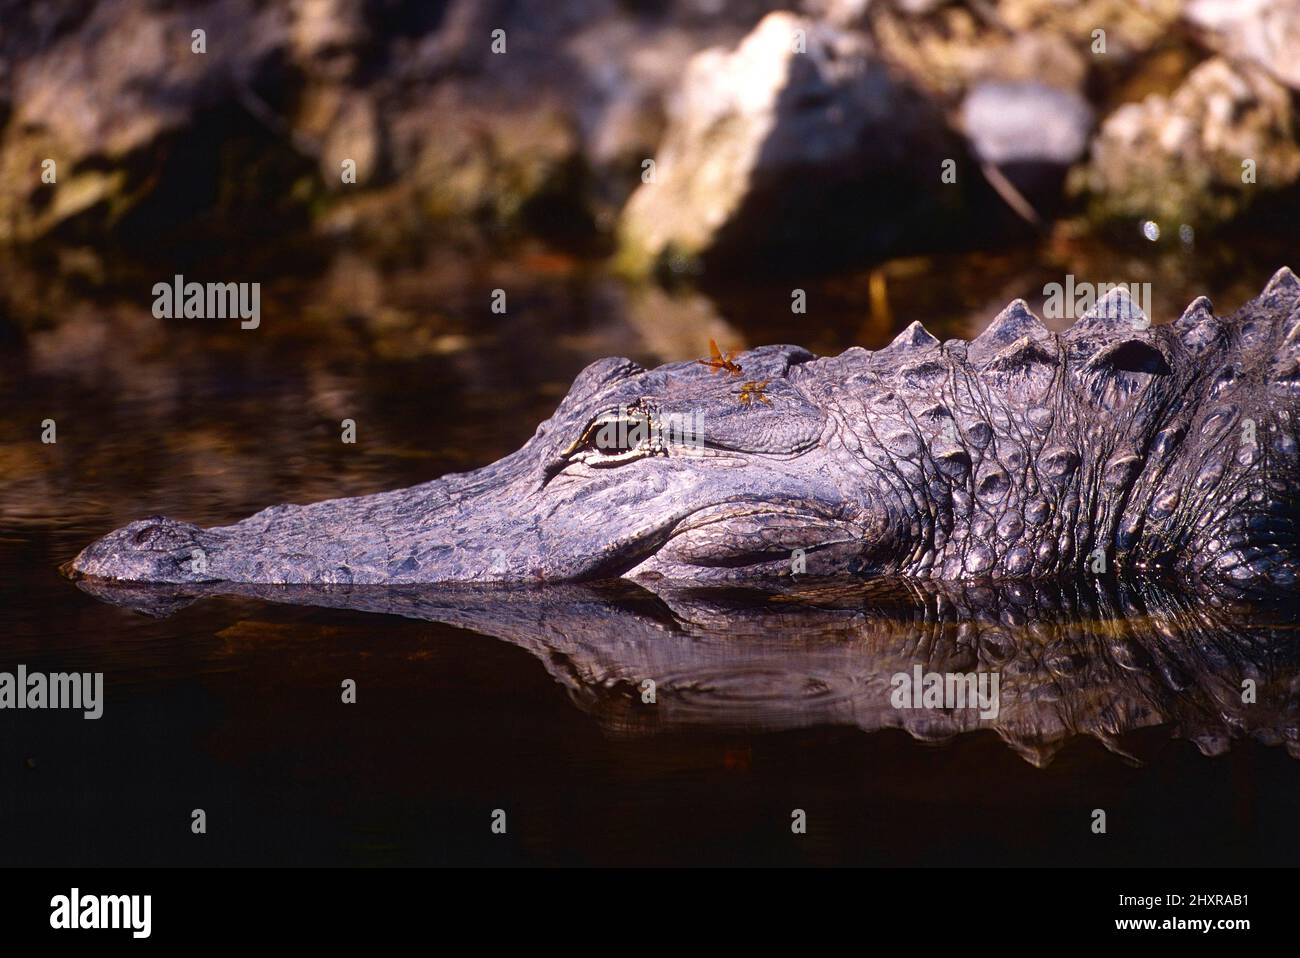 Mississippi-Alligator, Alligator mississippiensis, Alligatoridae, Echse, Reptil, Libelle, Insekt, Tier, Everglades Nationalpark, Florida, USA Stock Photo